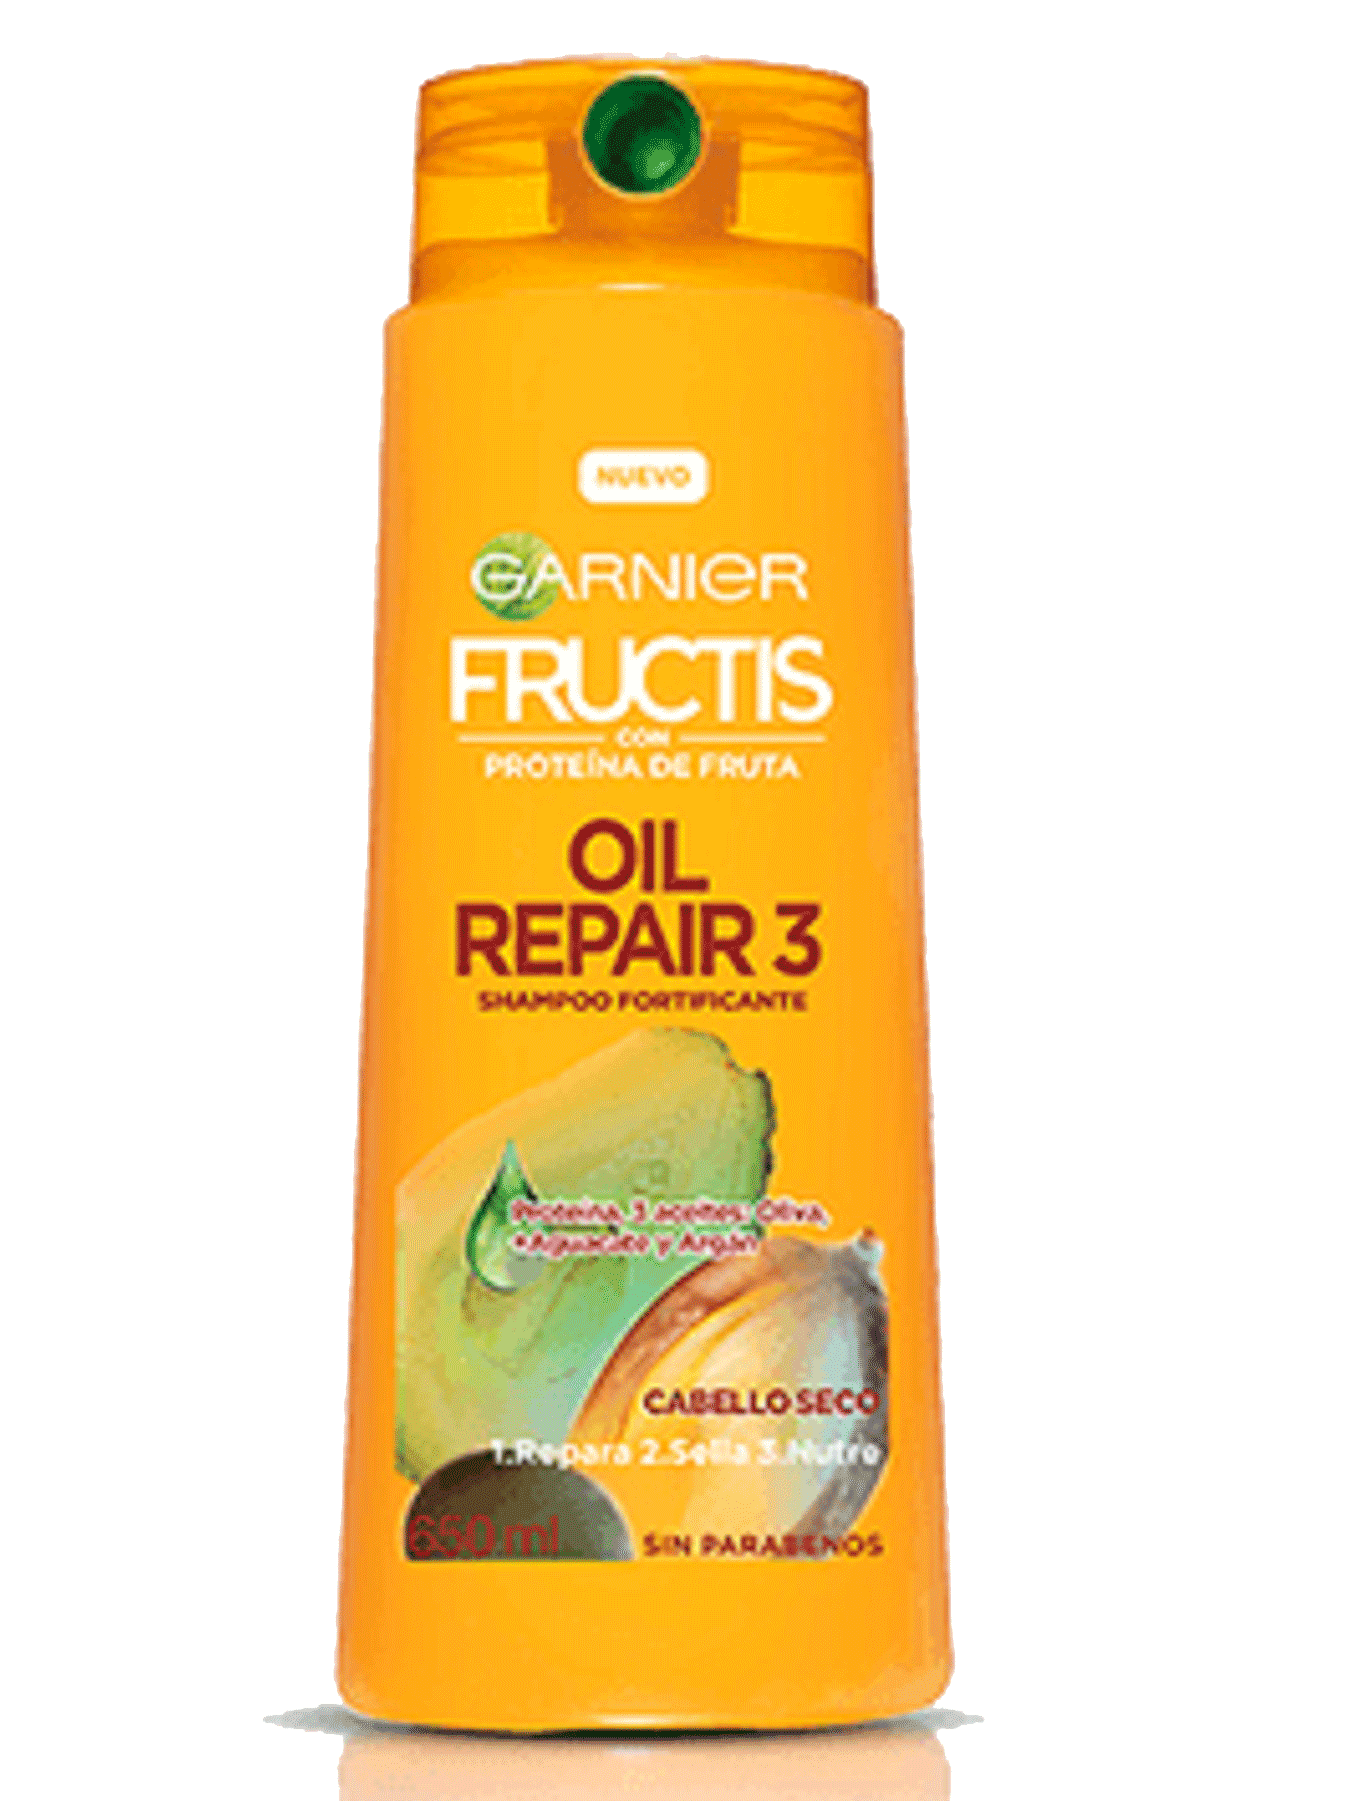 shampoo fortificante oil repair 3